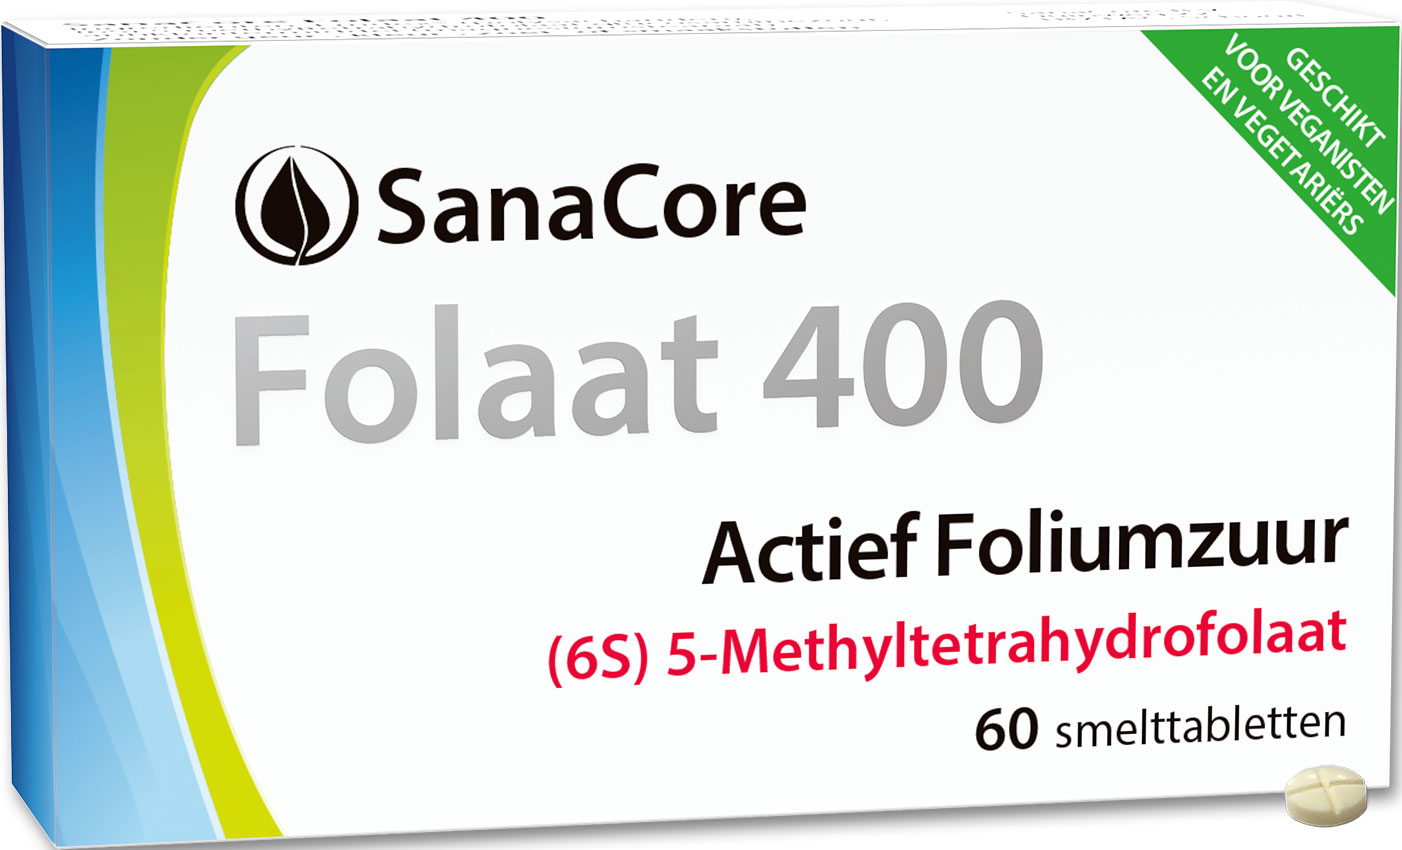 SanaCore Folaat 400 (6S)